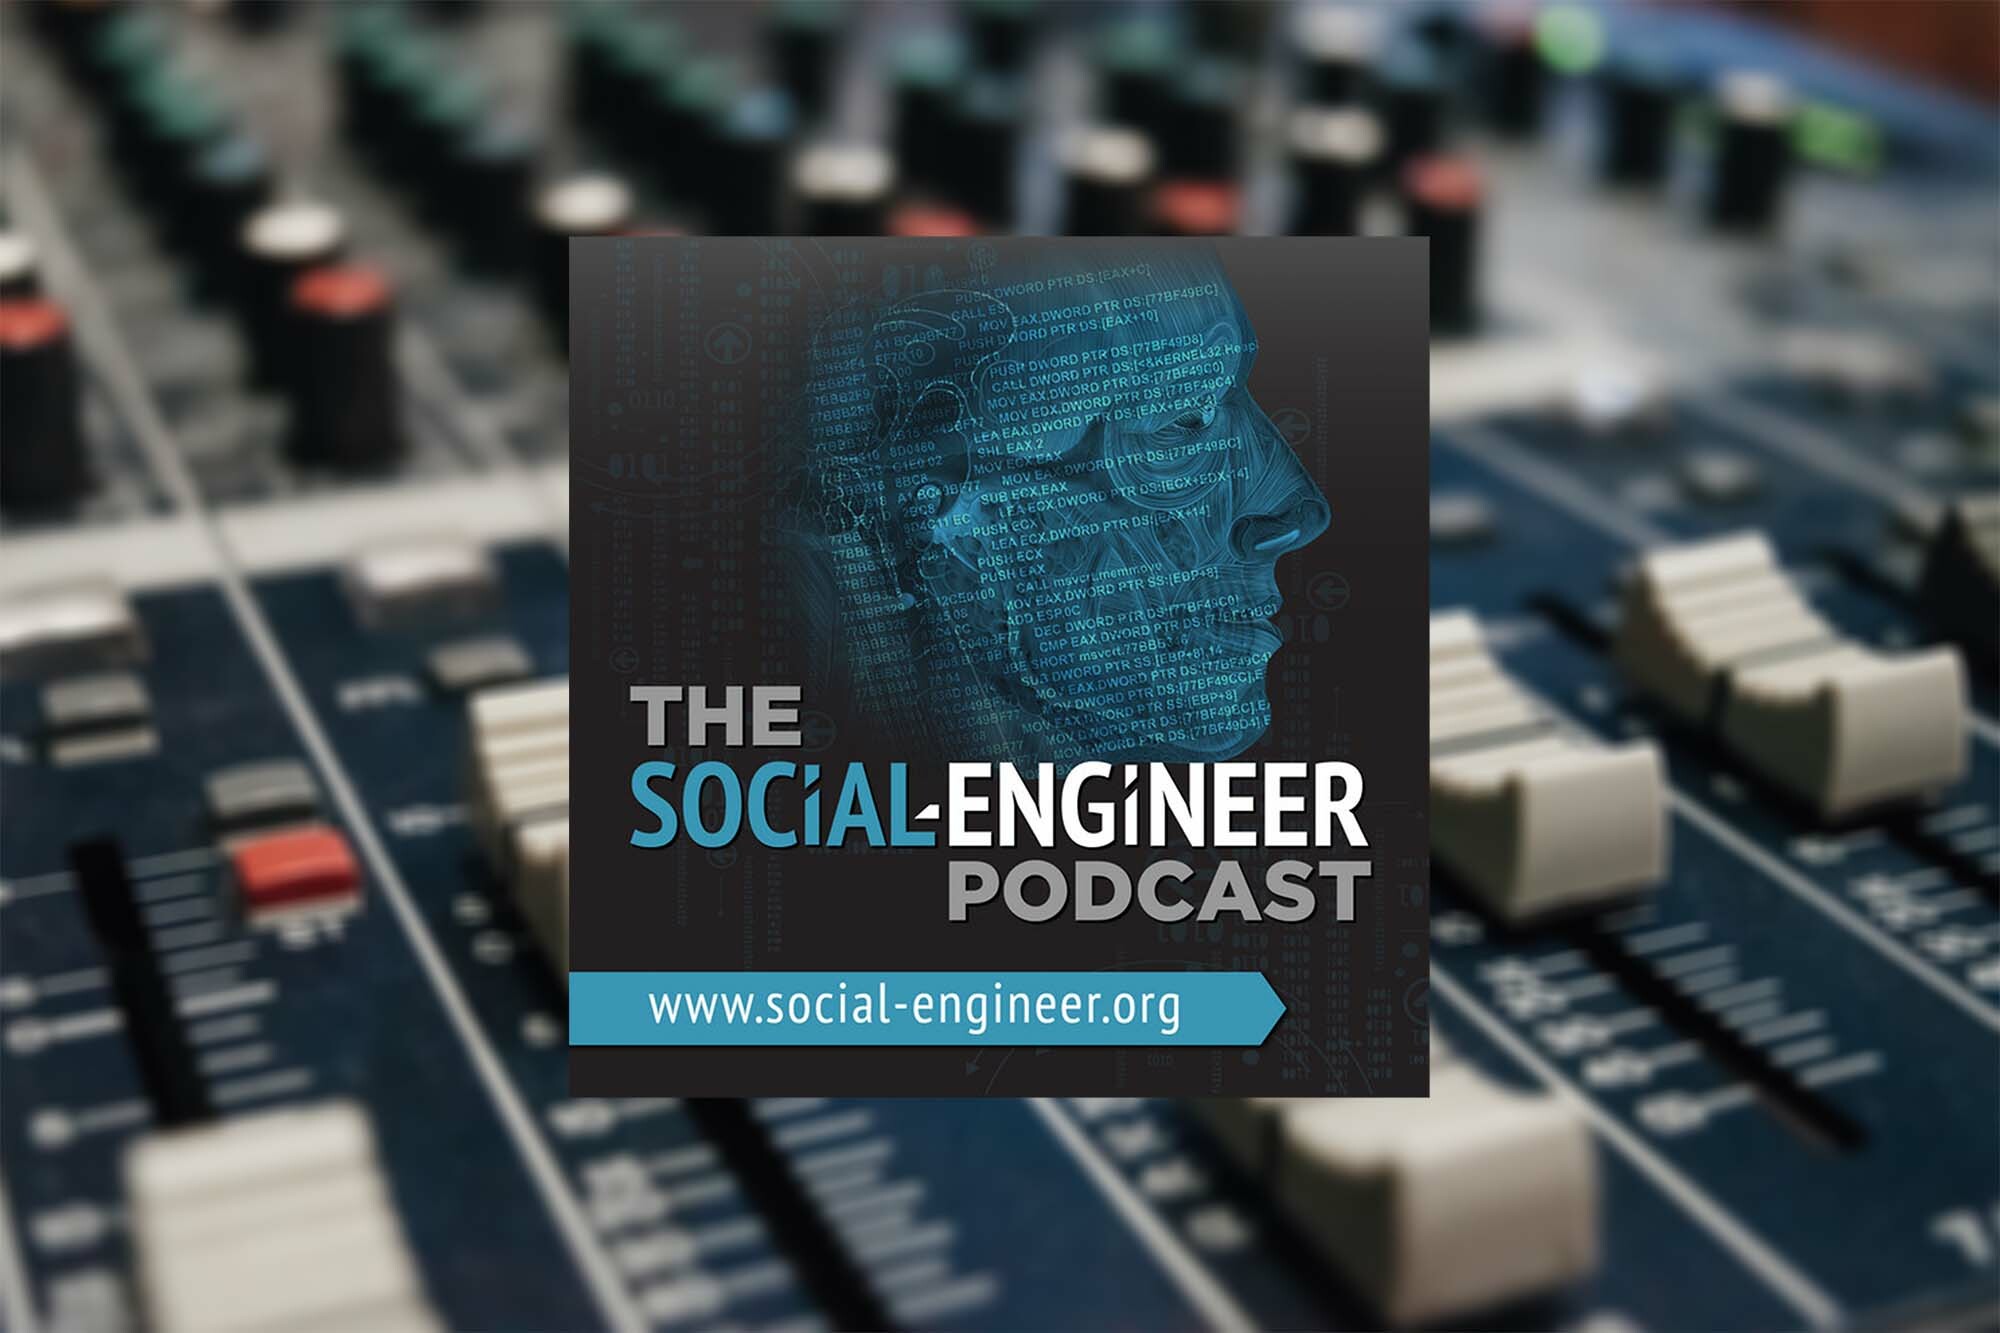 Social engineering podcast logo